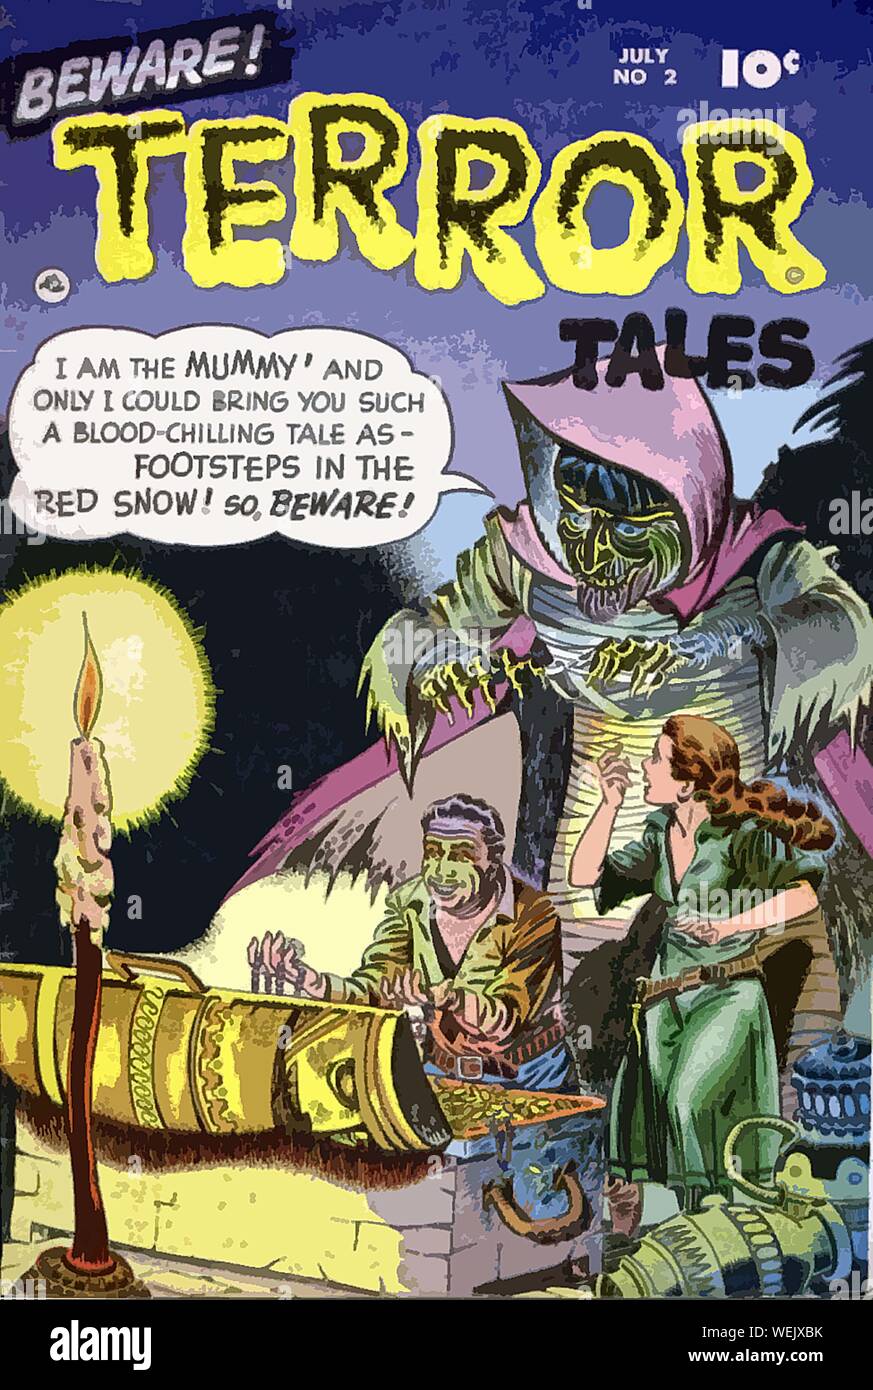 Vintage comic book cover artwork Stock Photo